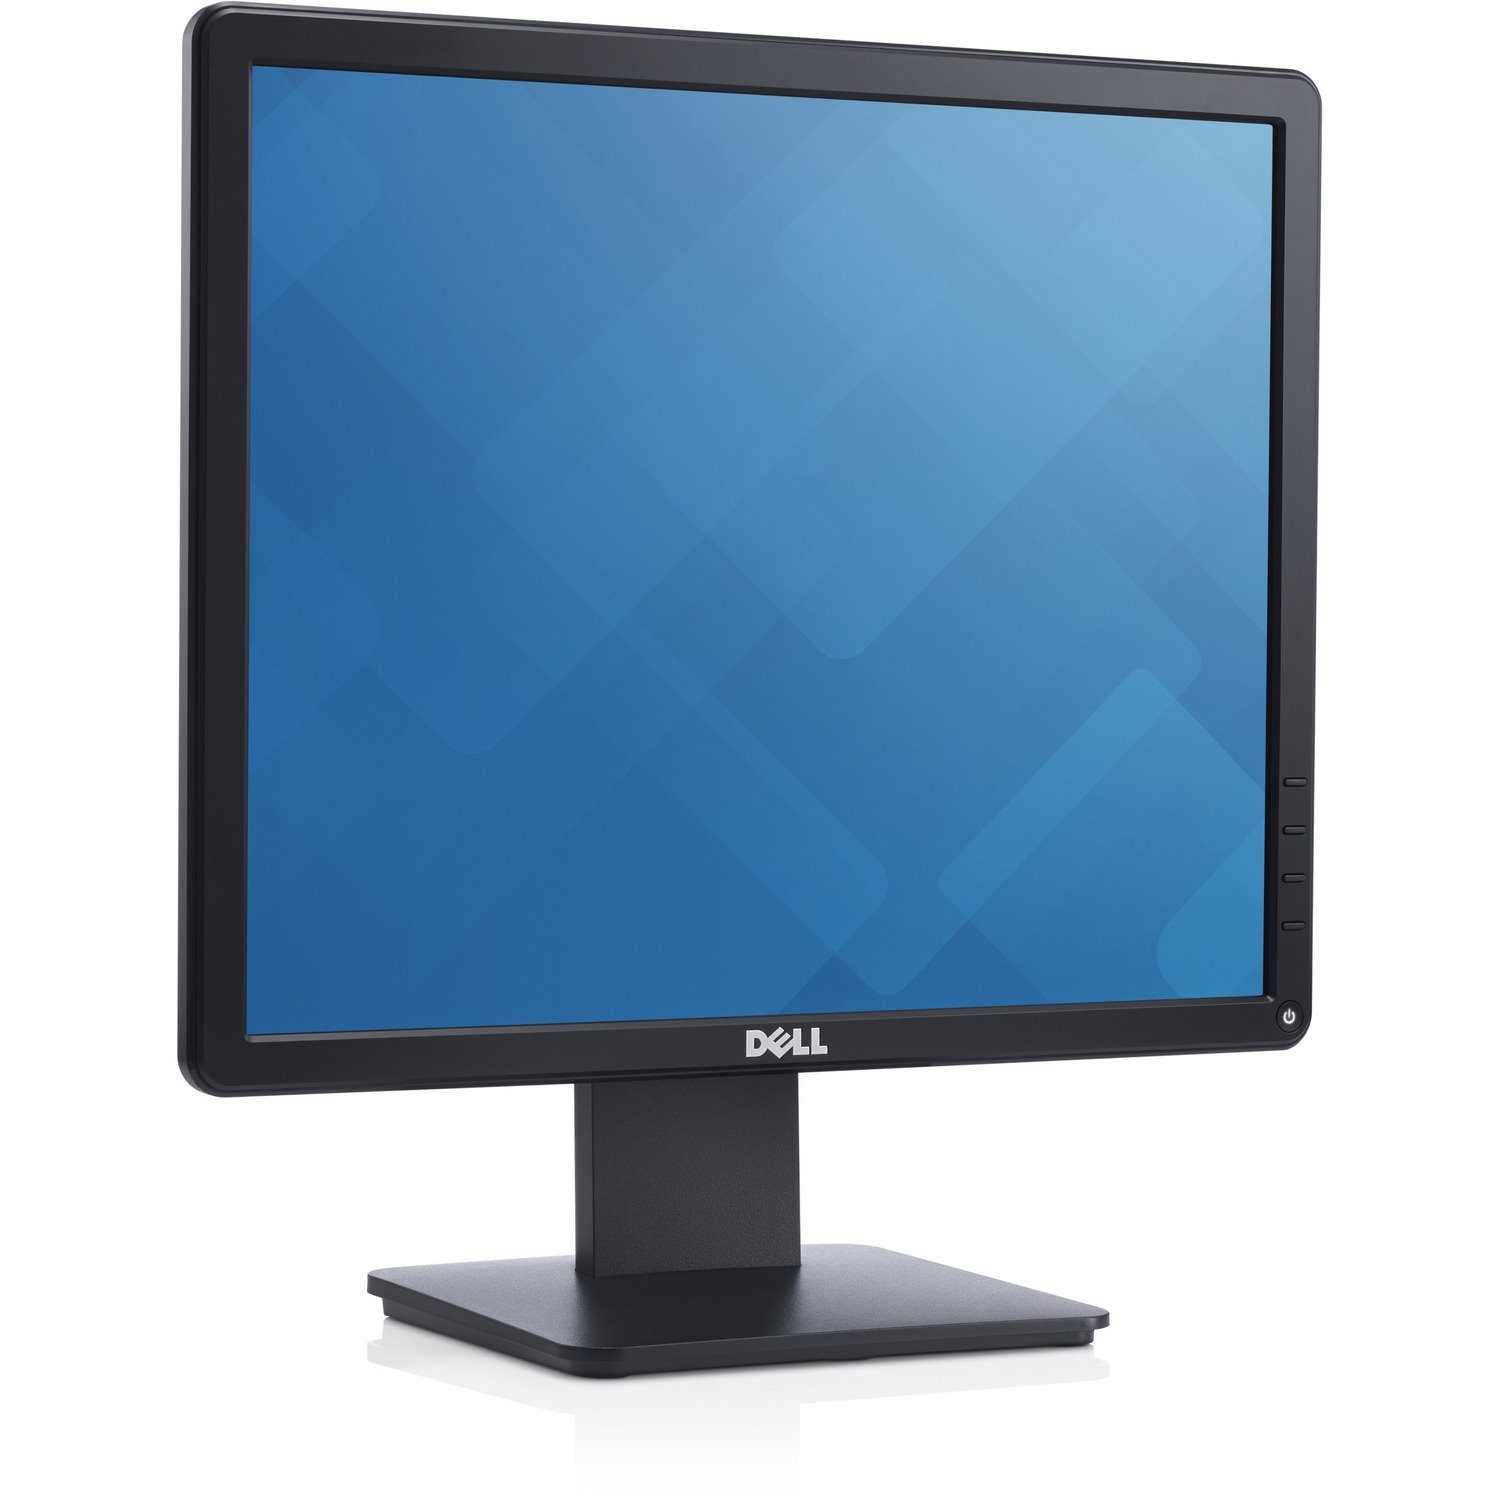 Dell E1715S 17" SXGA LED LCD Monitor - 5:4 - Black